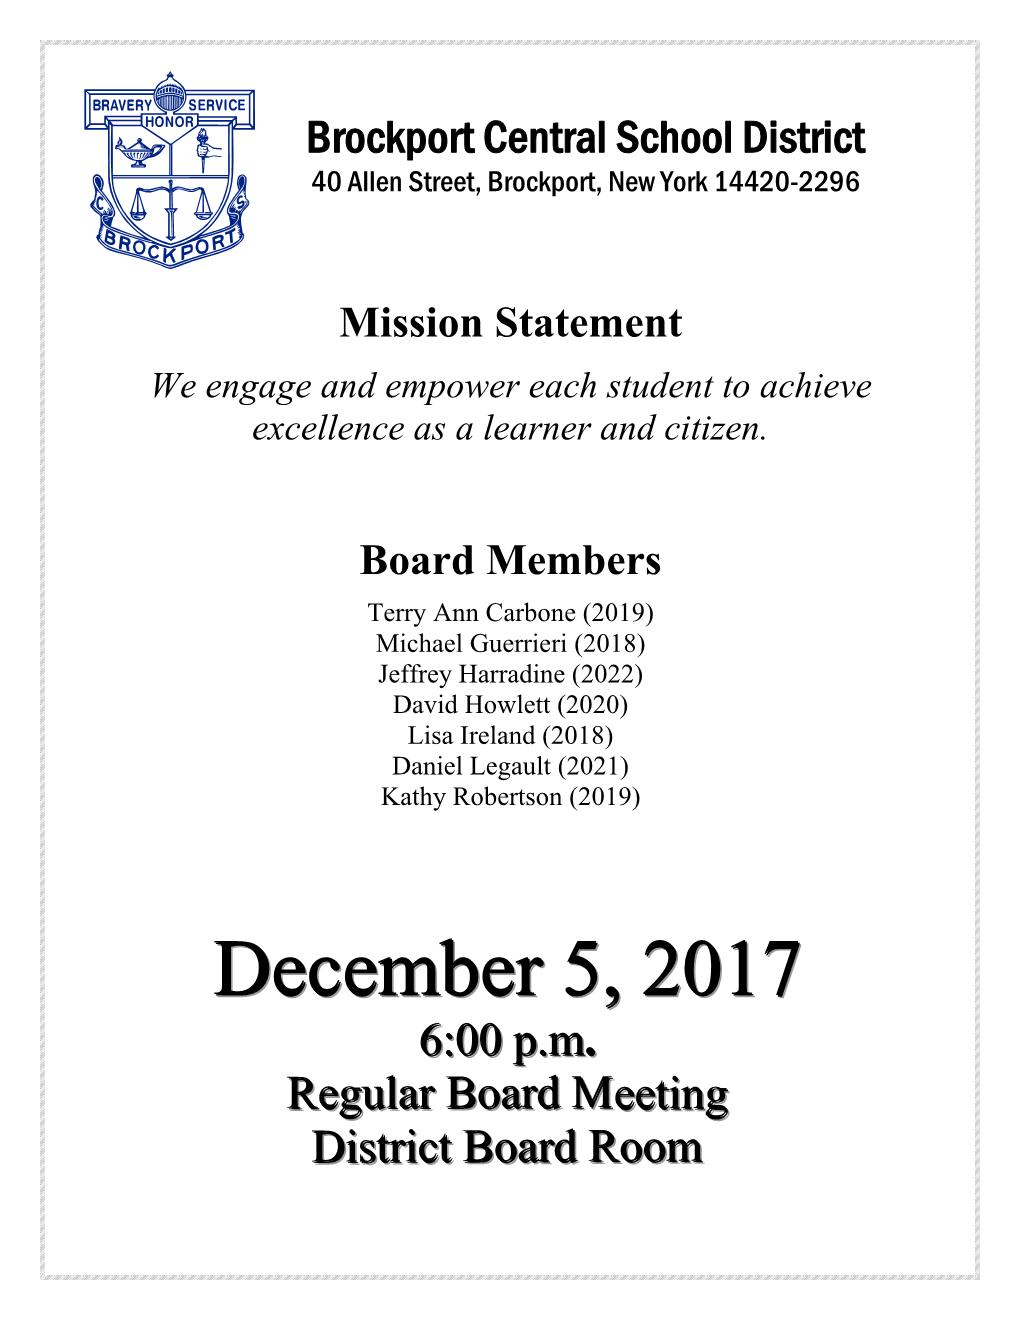 December 5, 2017 Regular Meeting 6:00 P.M